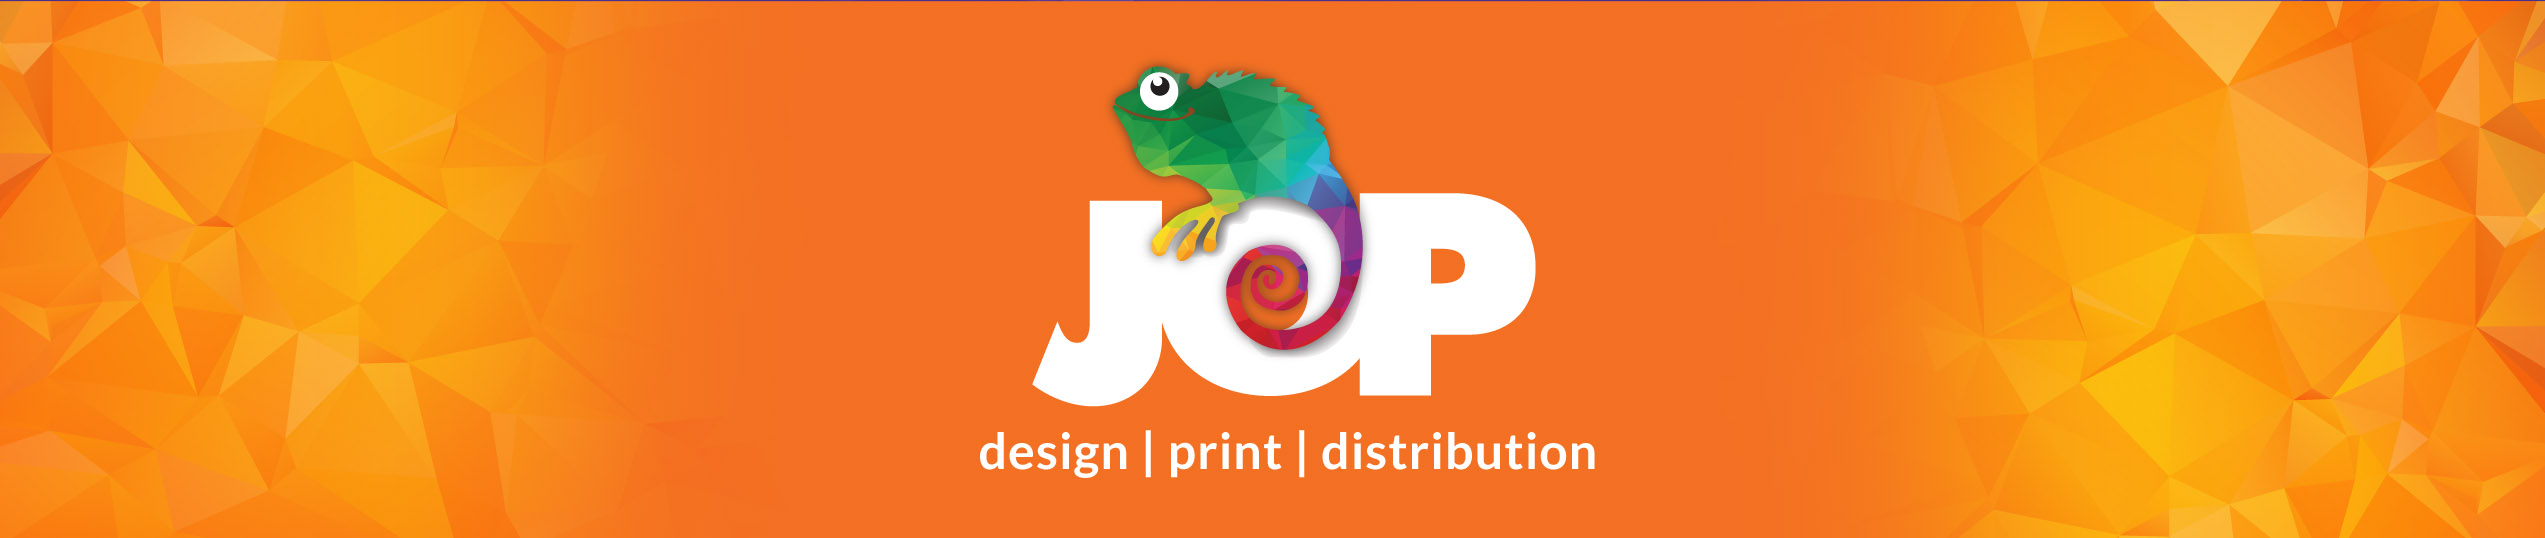 JOP design print distribution. Ollie the Chameleon